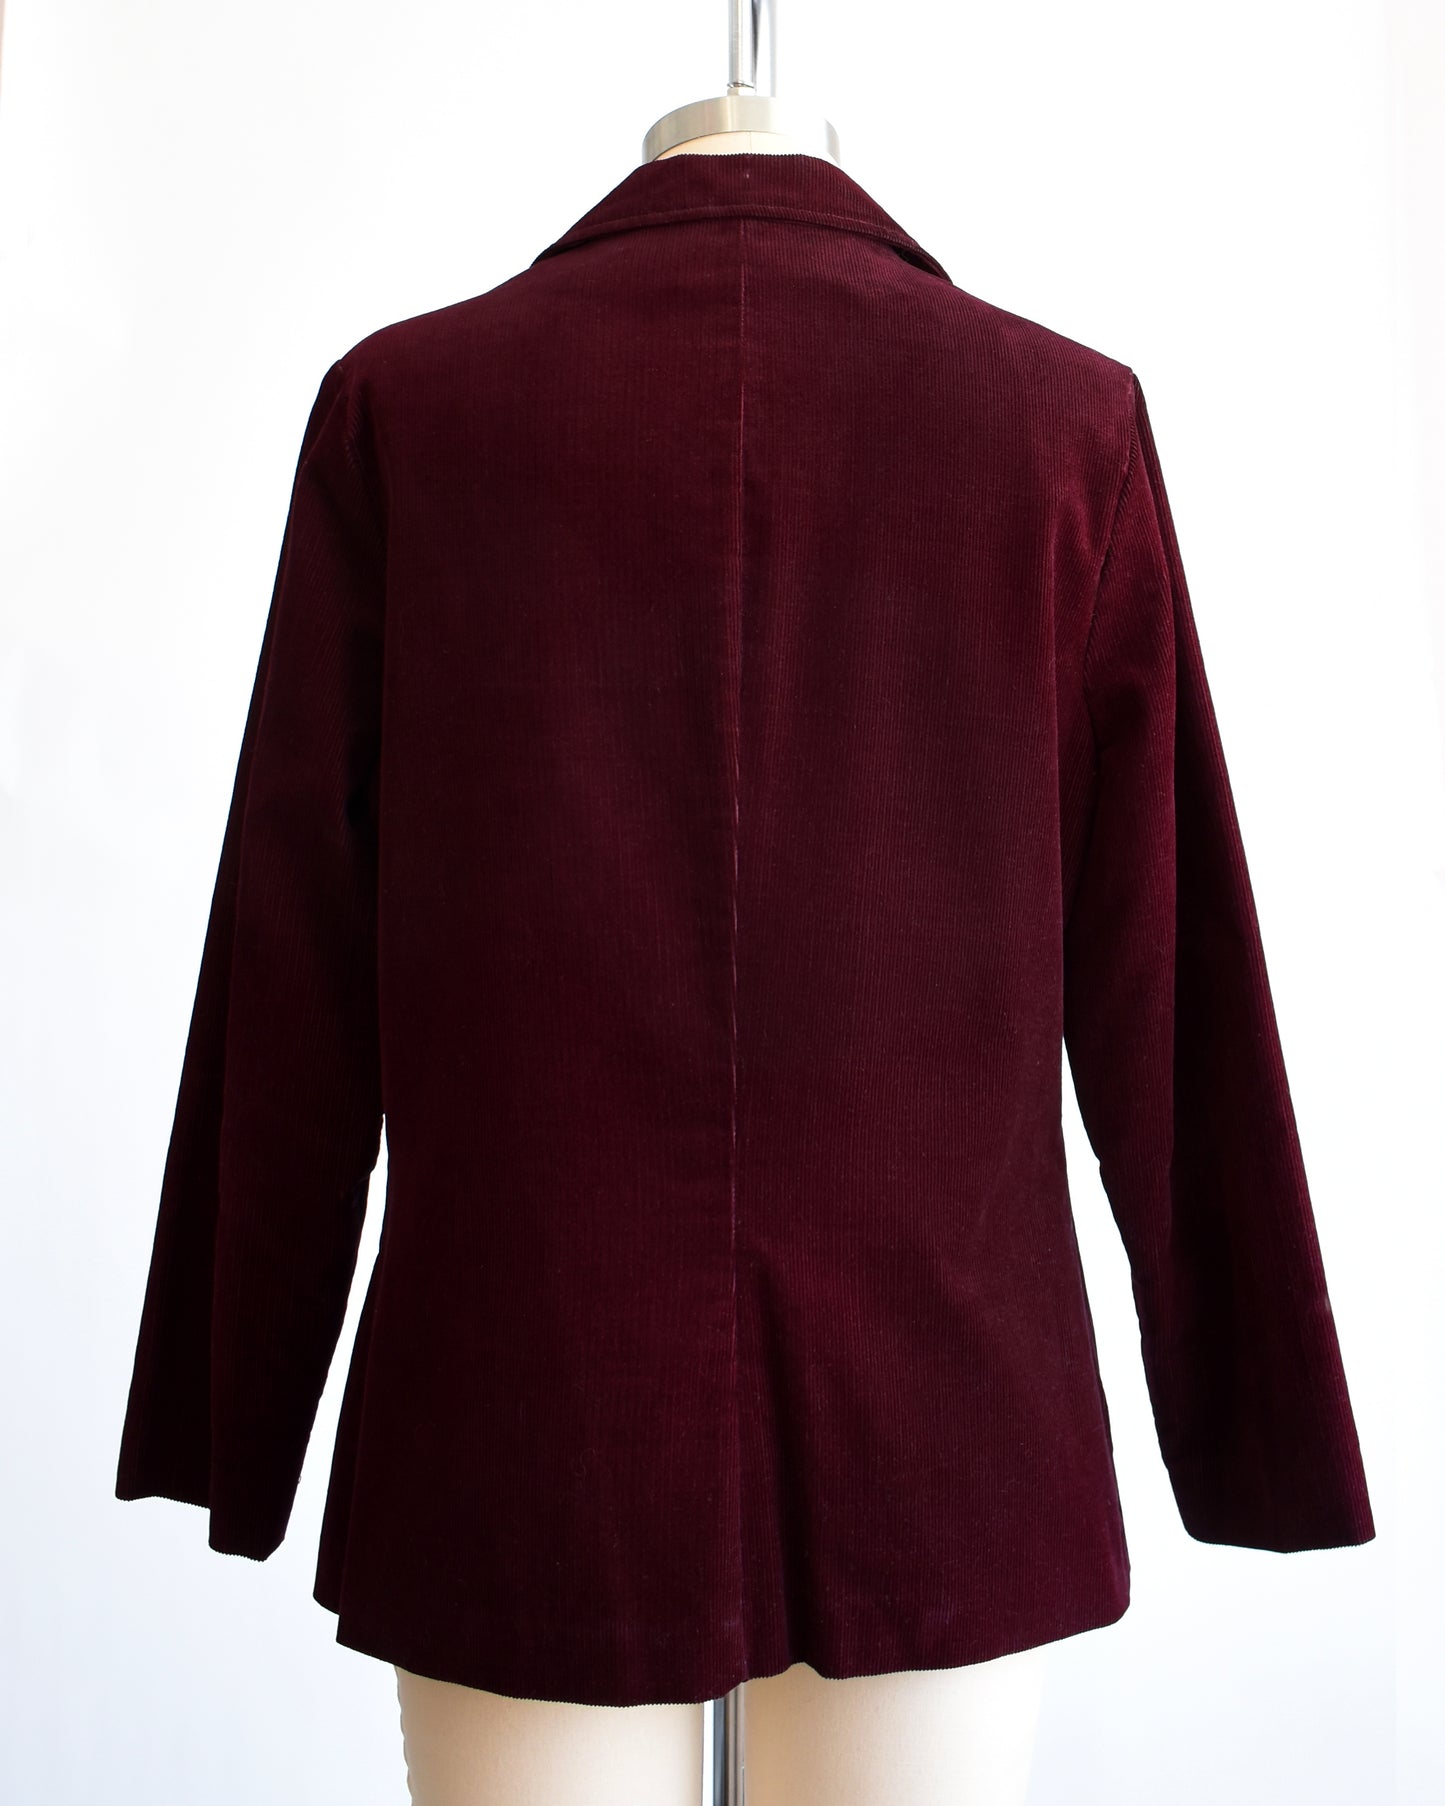 Back view of a vintage 1980s burgundy corduroy blazer